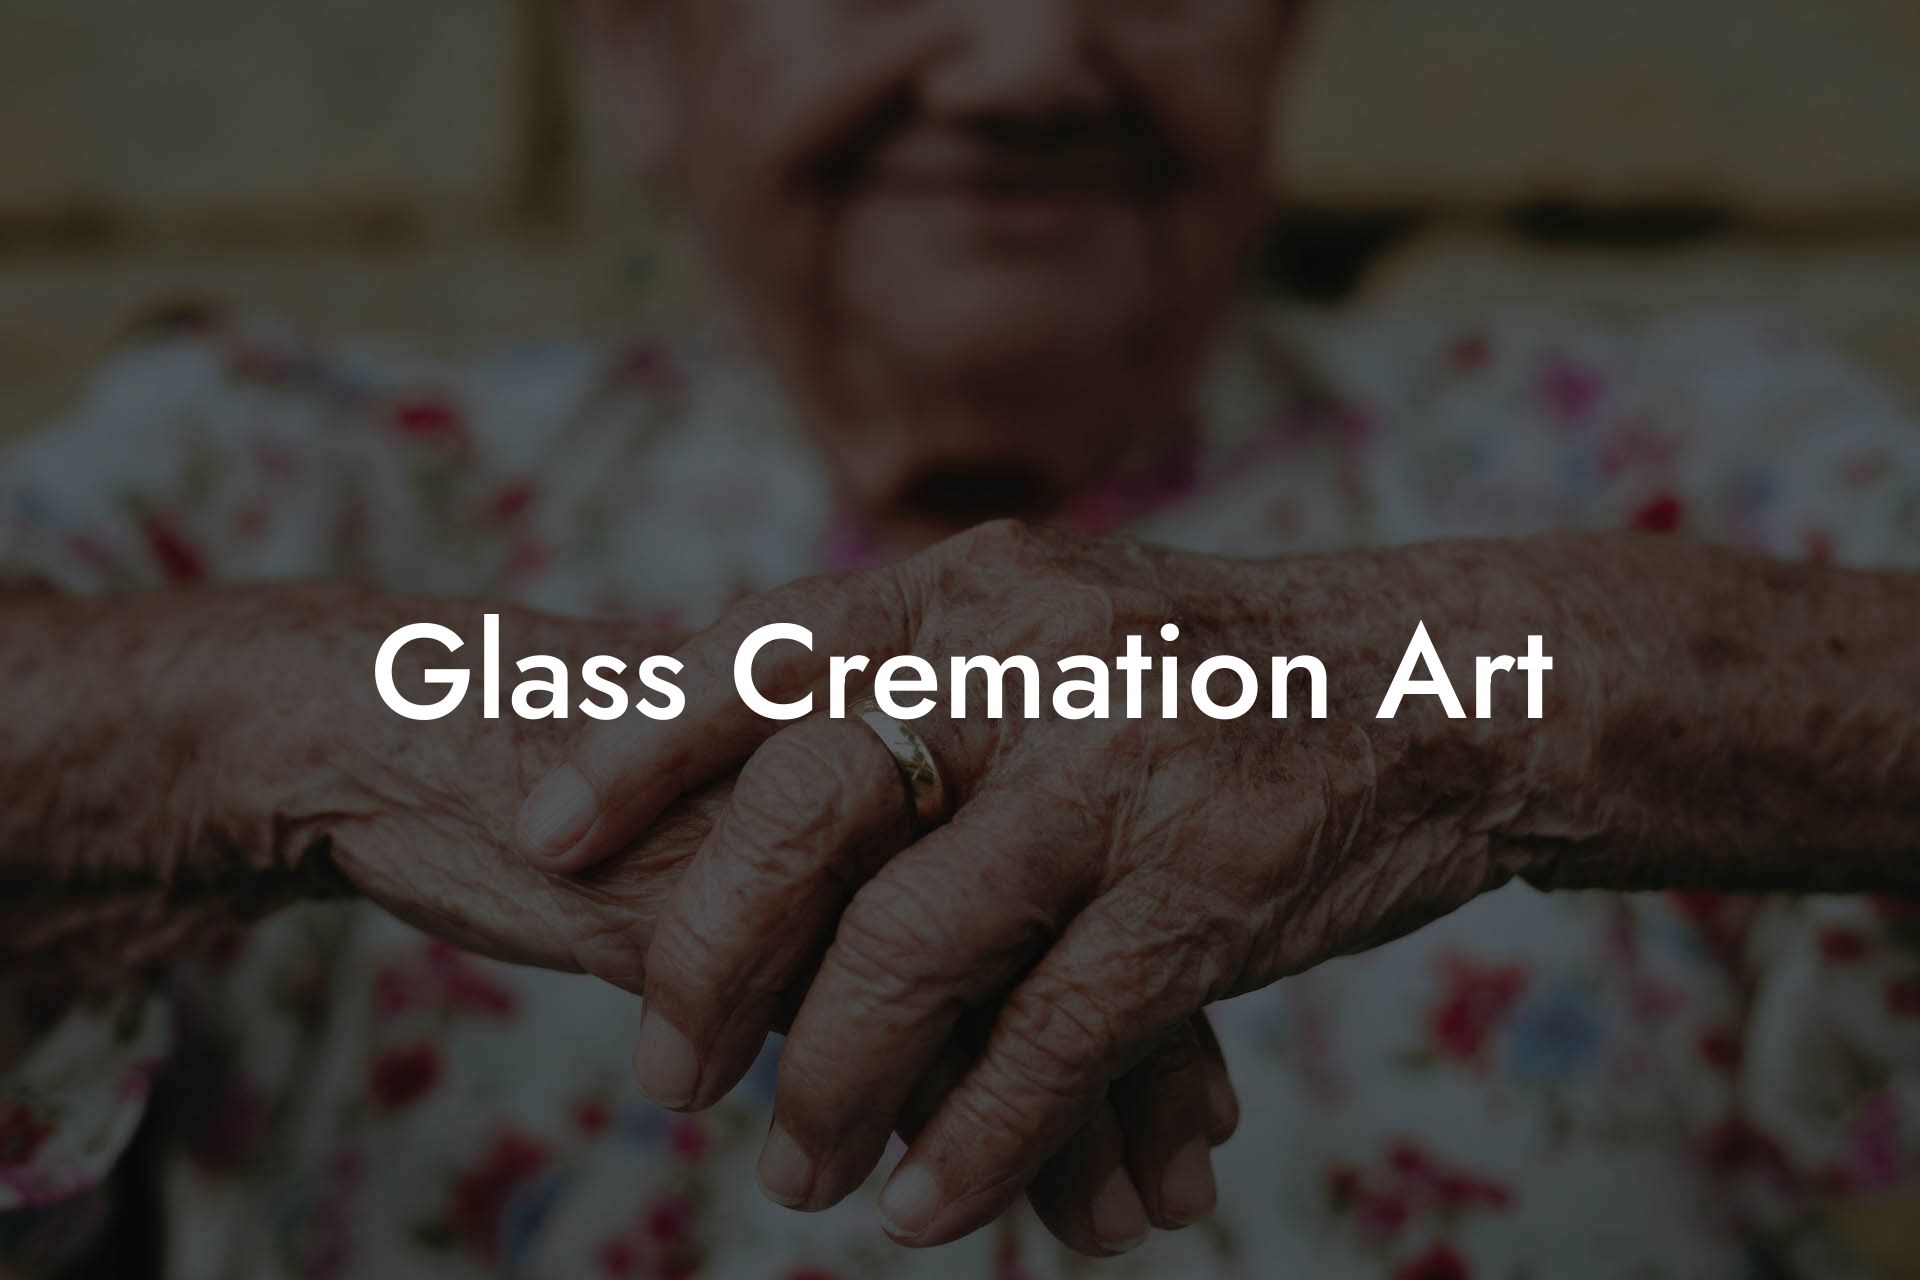 Glass Cremation Art